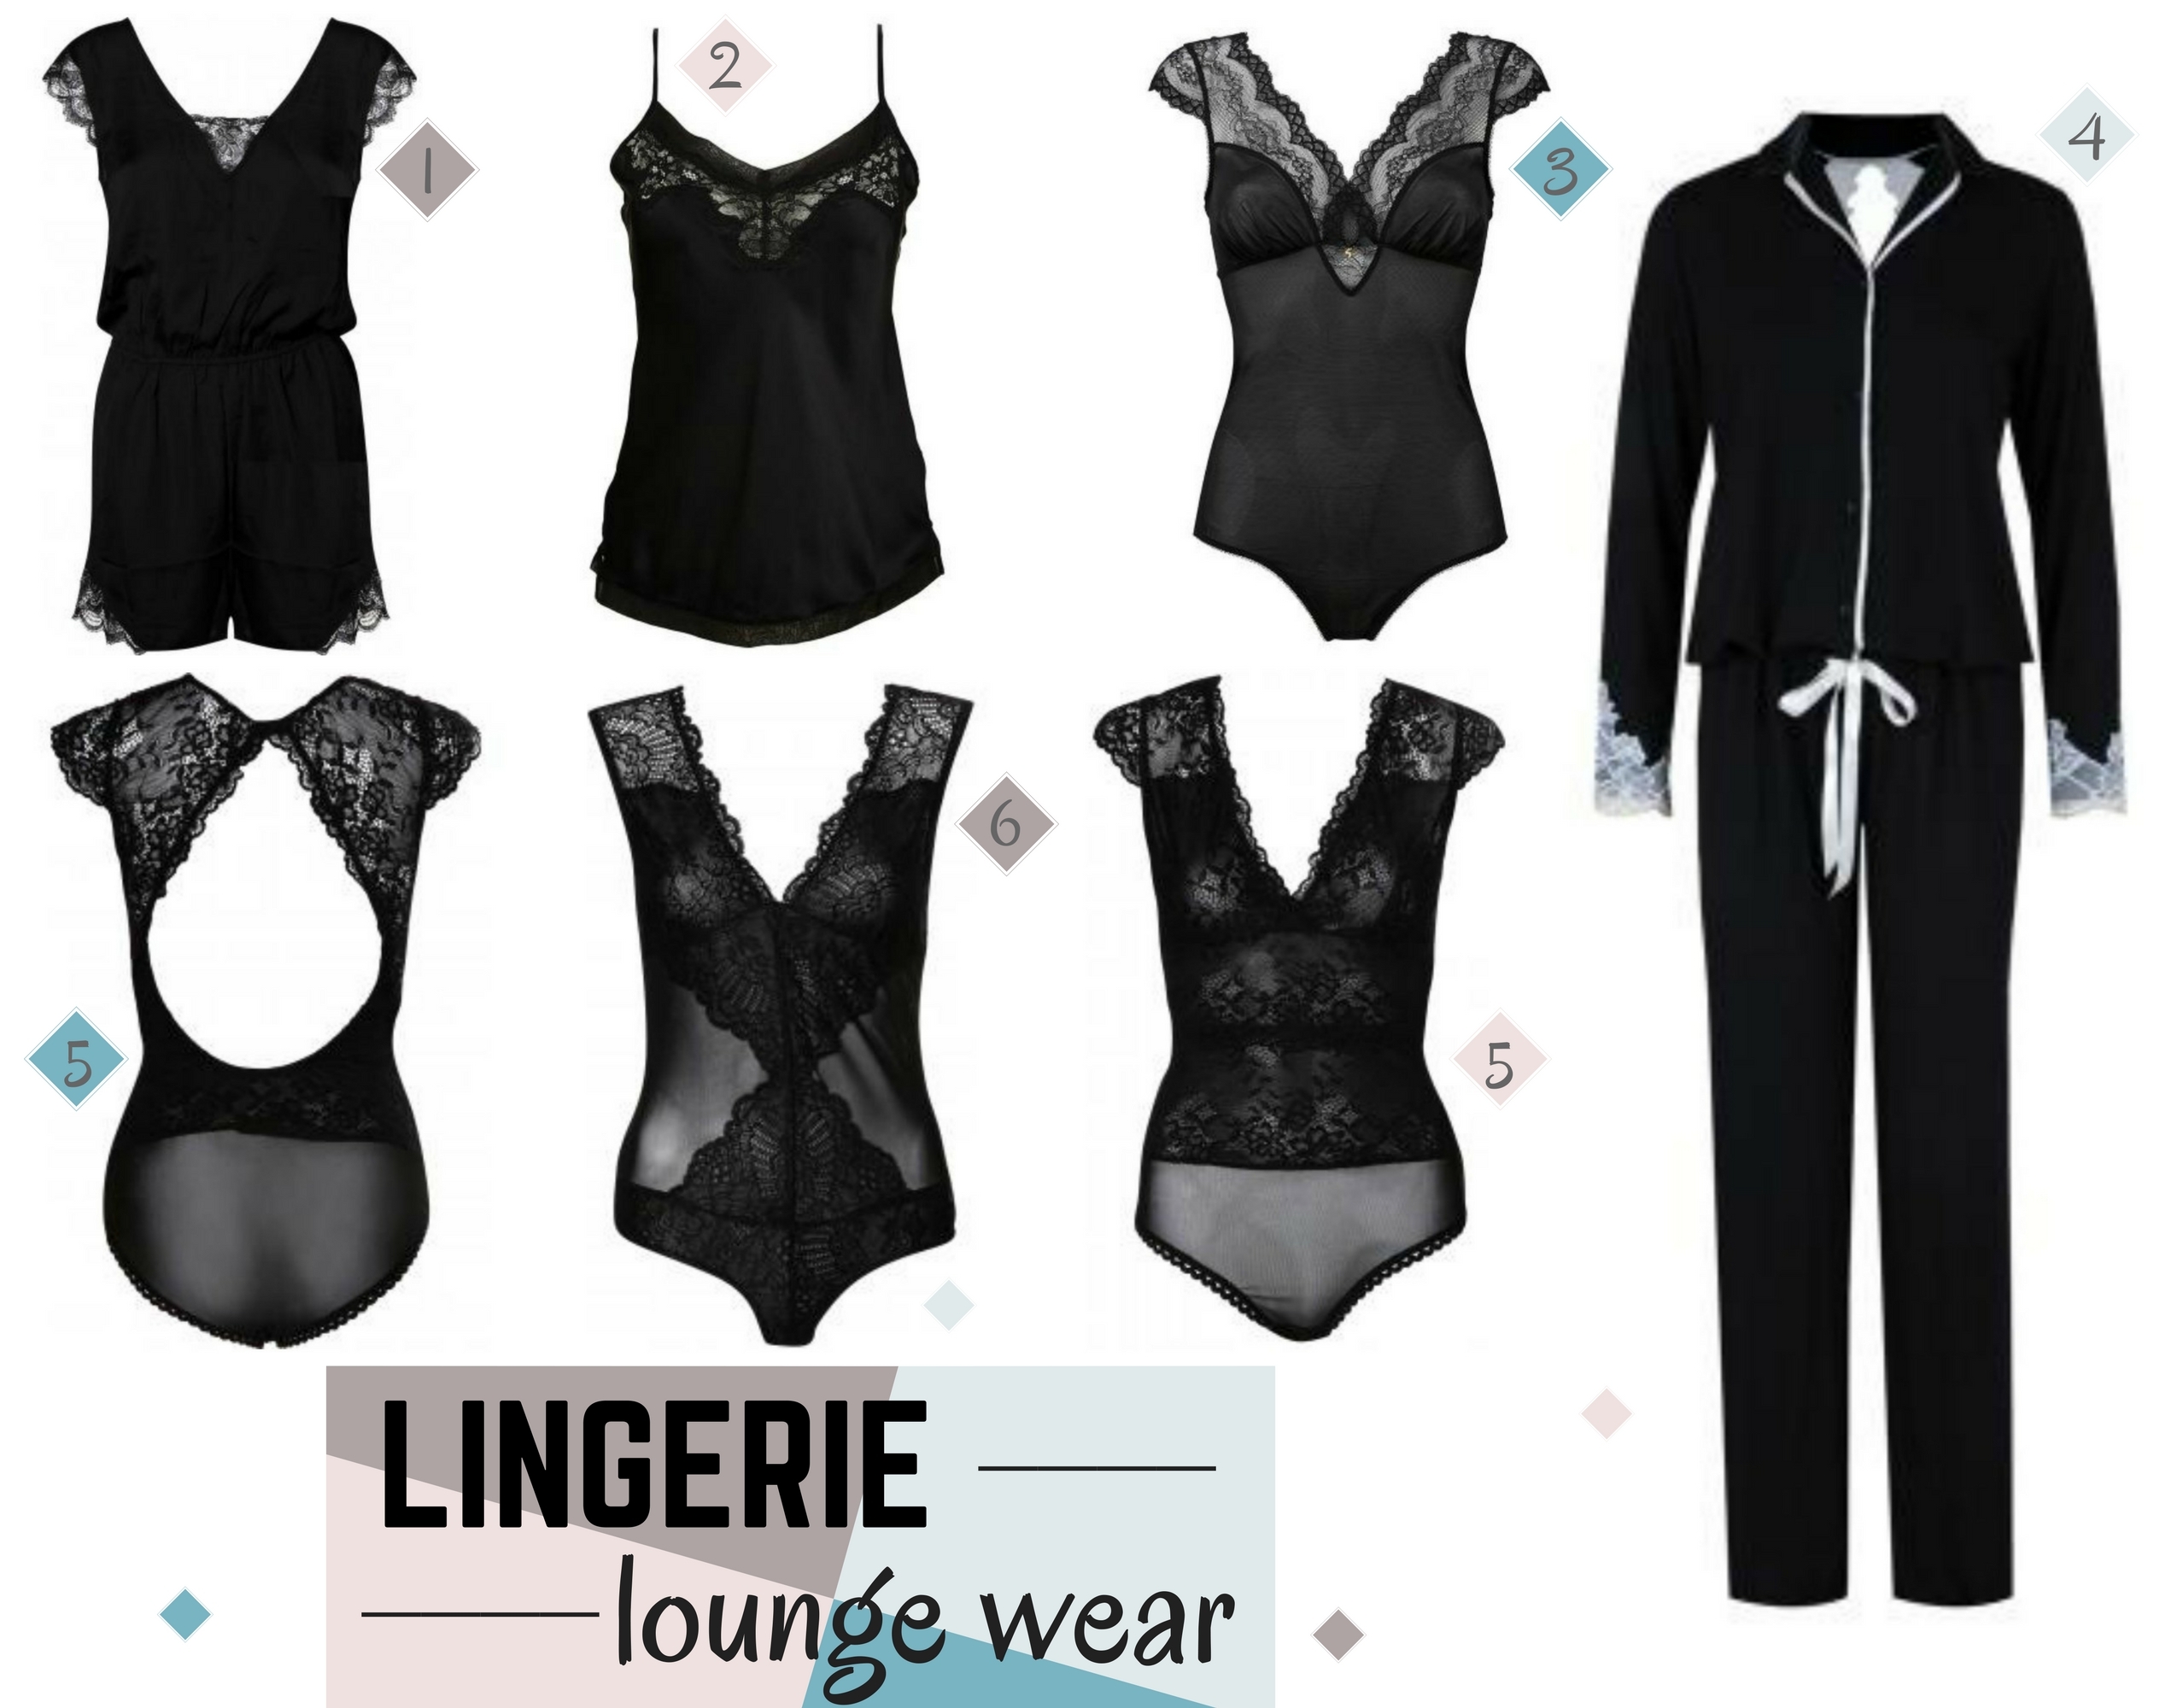 Lingerie loungewear - Lemon Curve